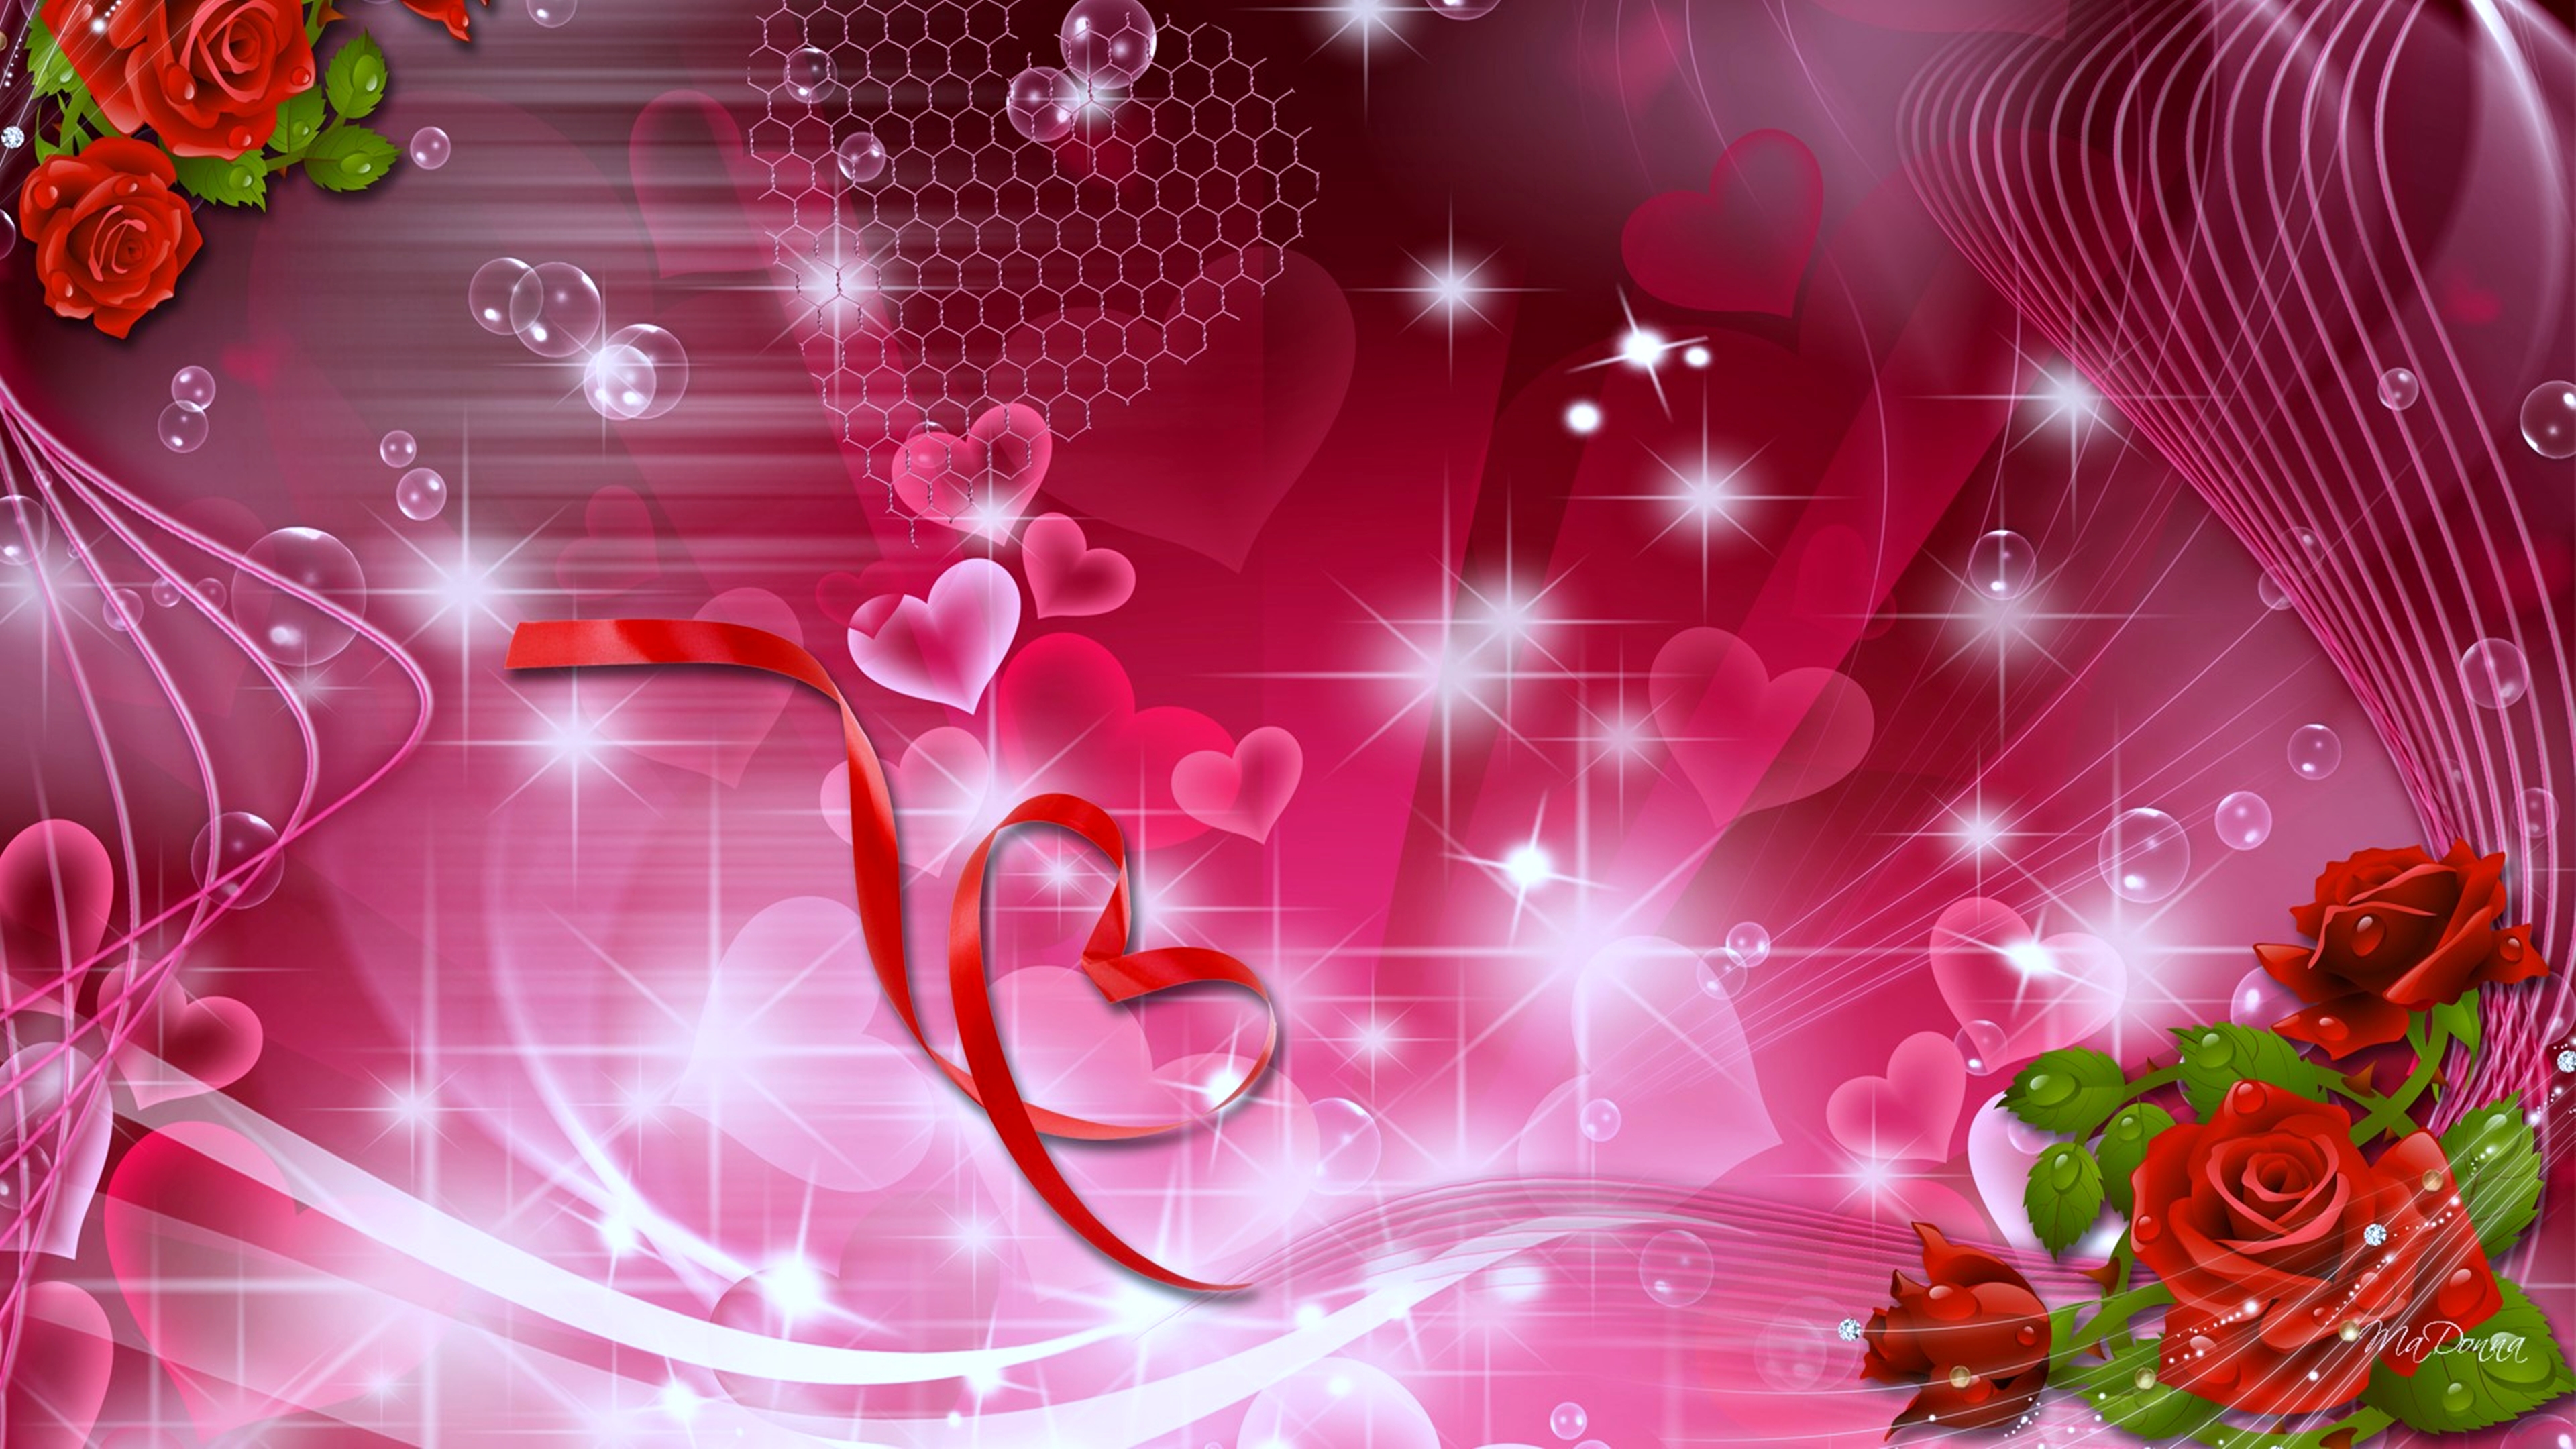 love, heart, rose, artistic, romantic iphone wallpaper